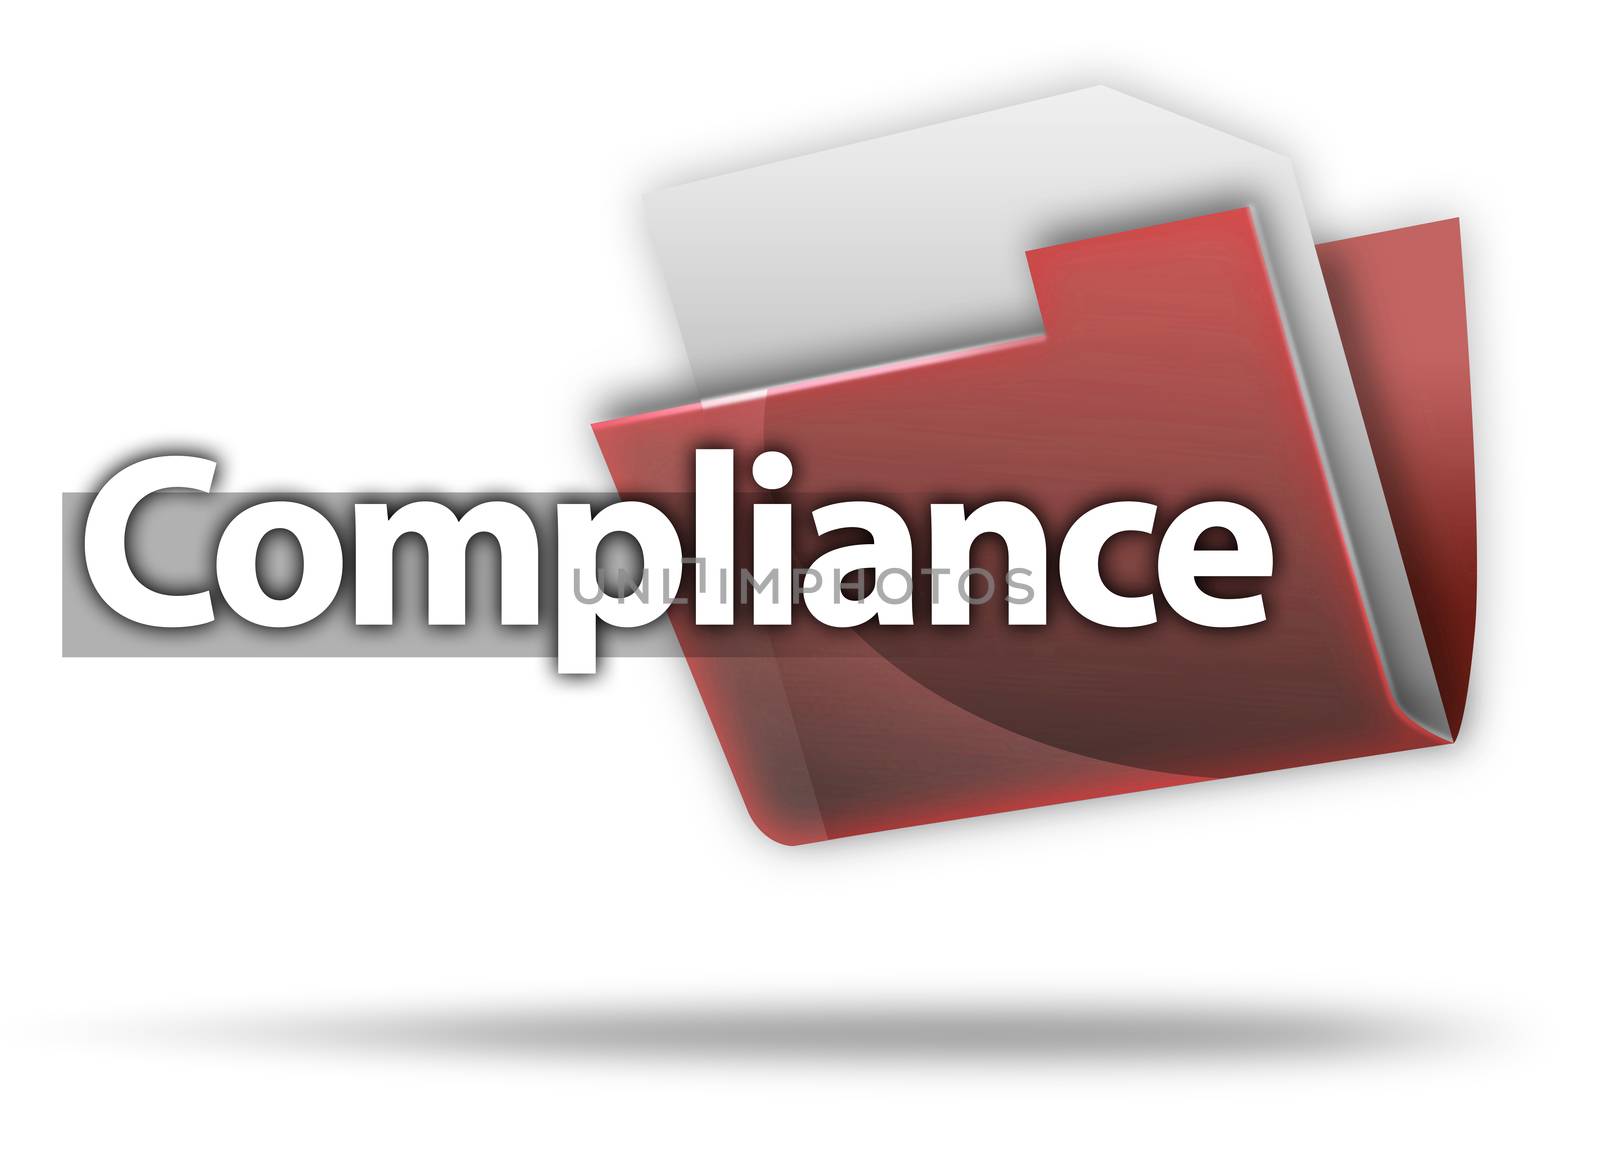 3D Style Folder Icon "Compliance"